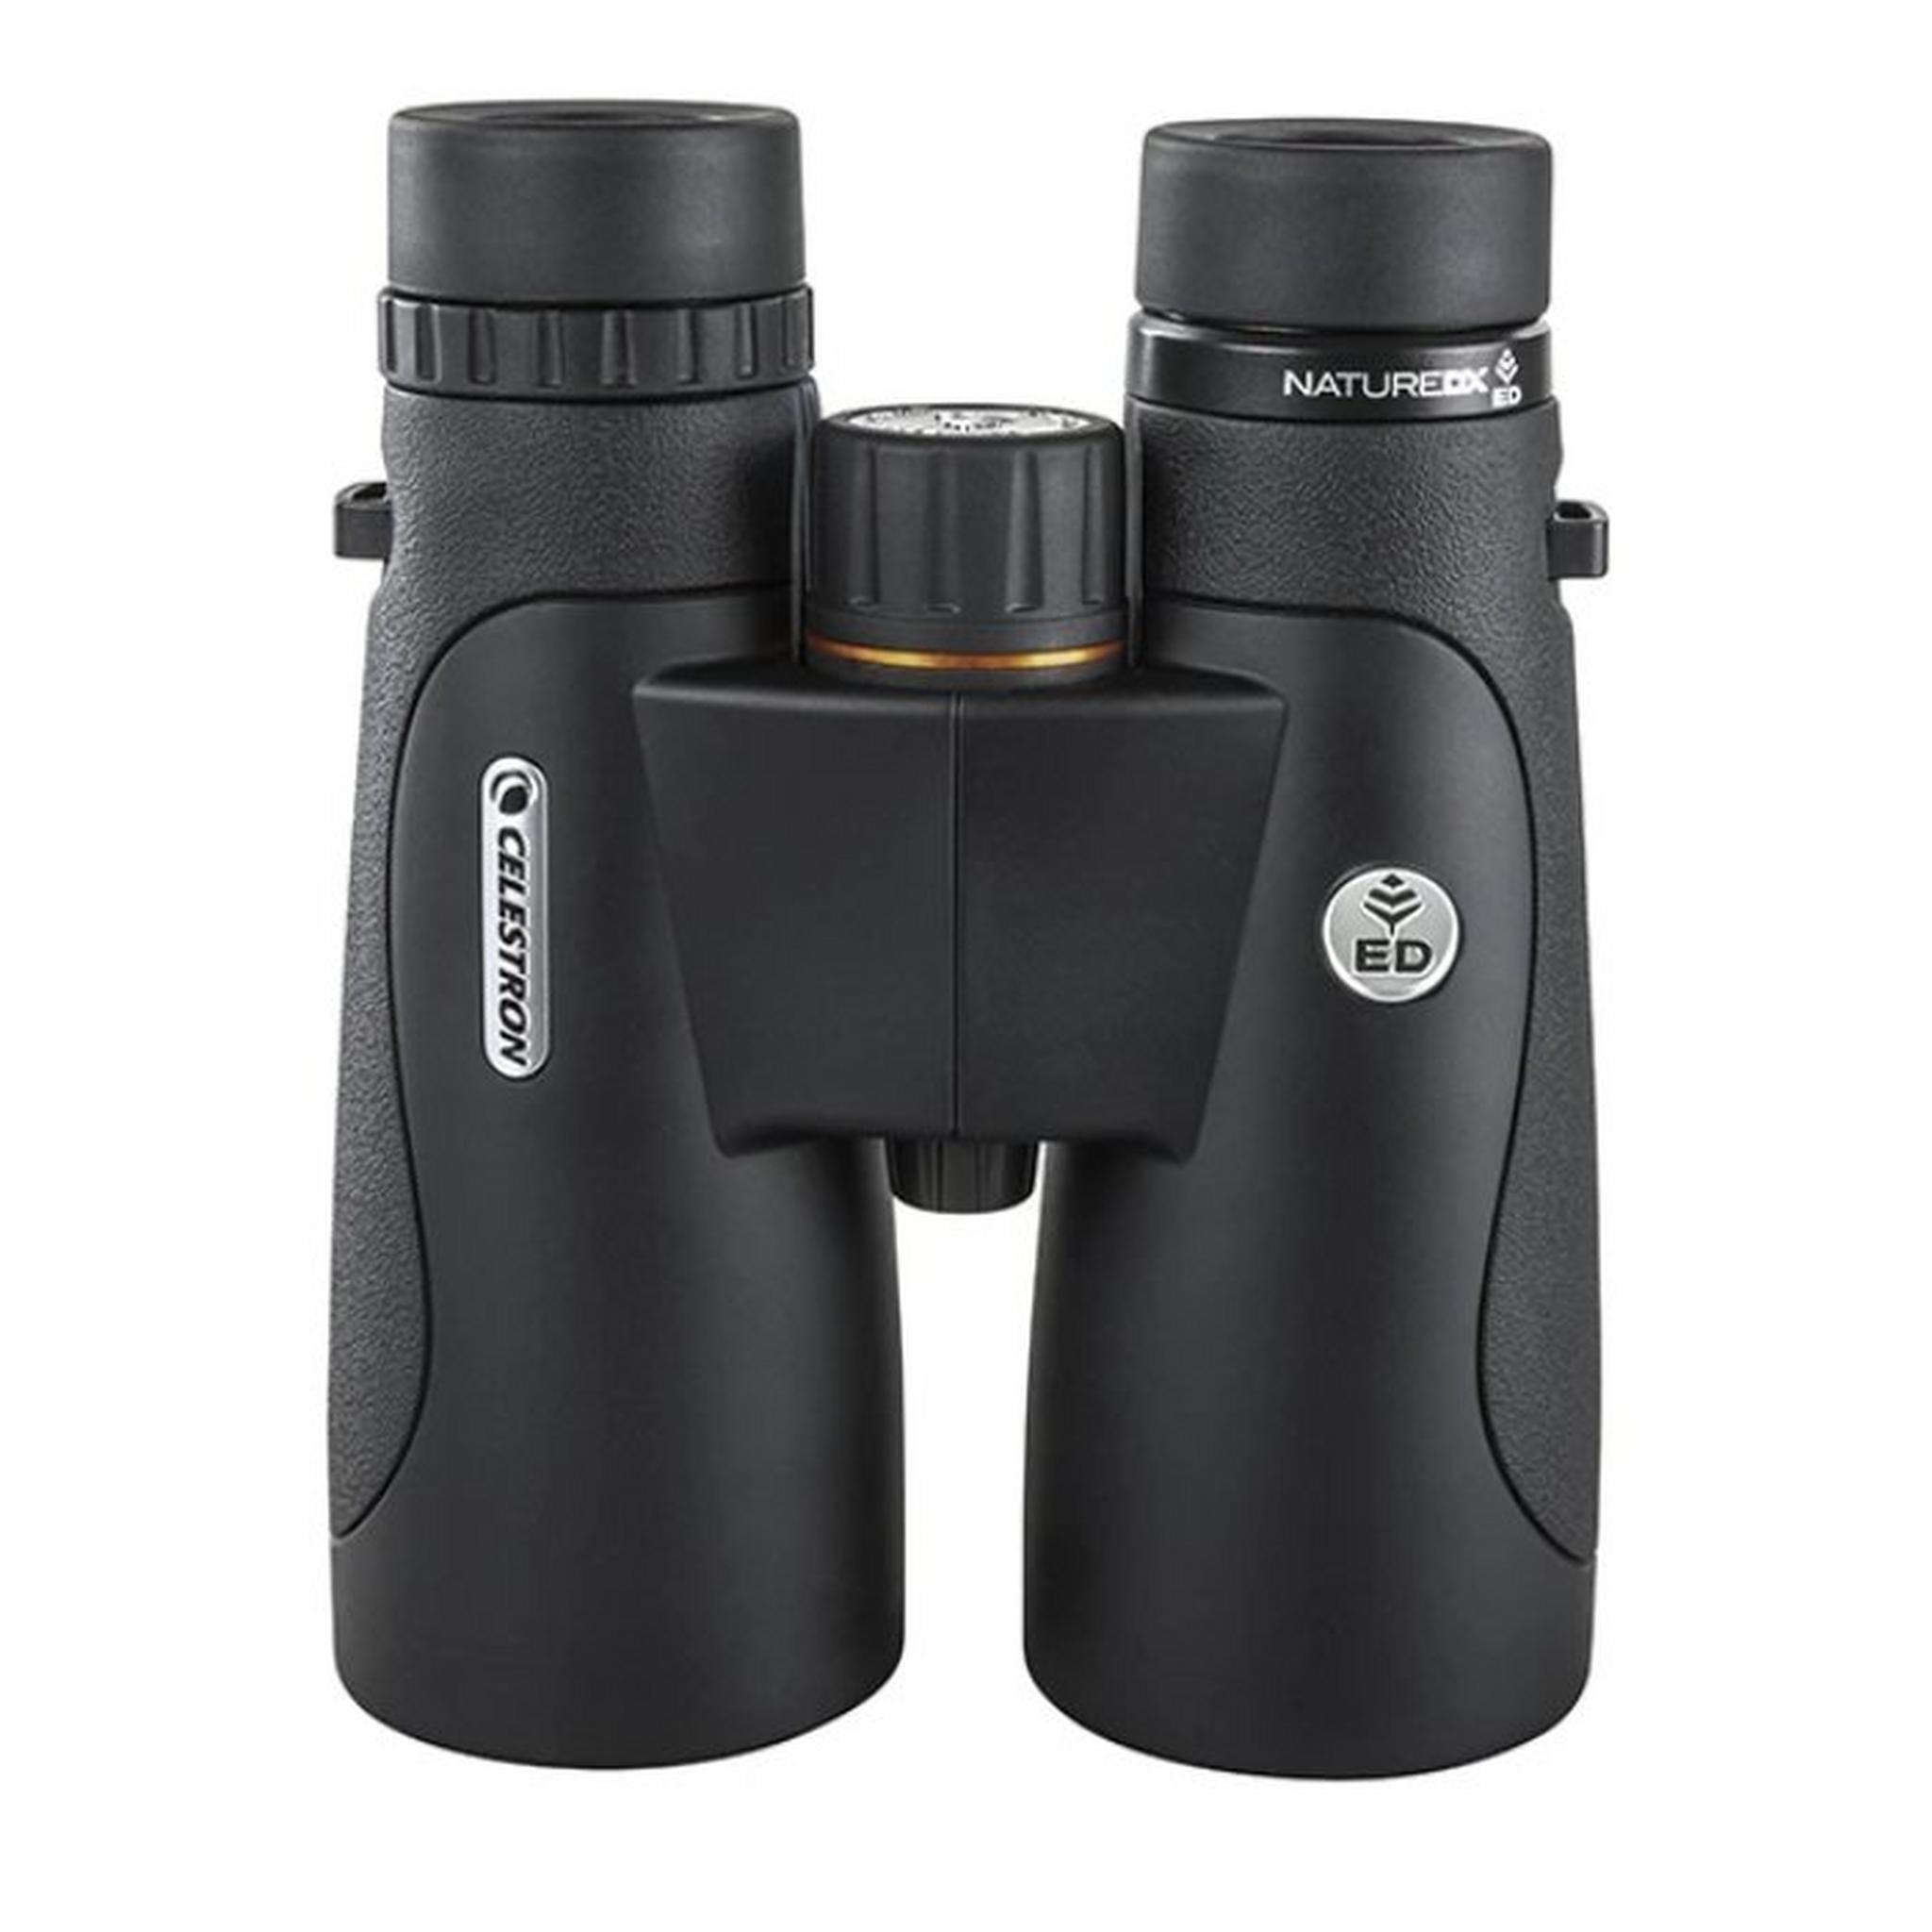 Celestron Nature DX ED 10X50 Binoculars